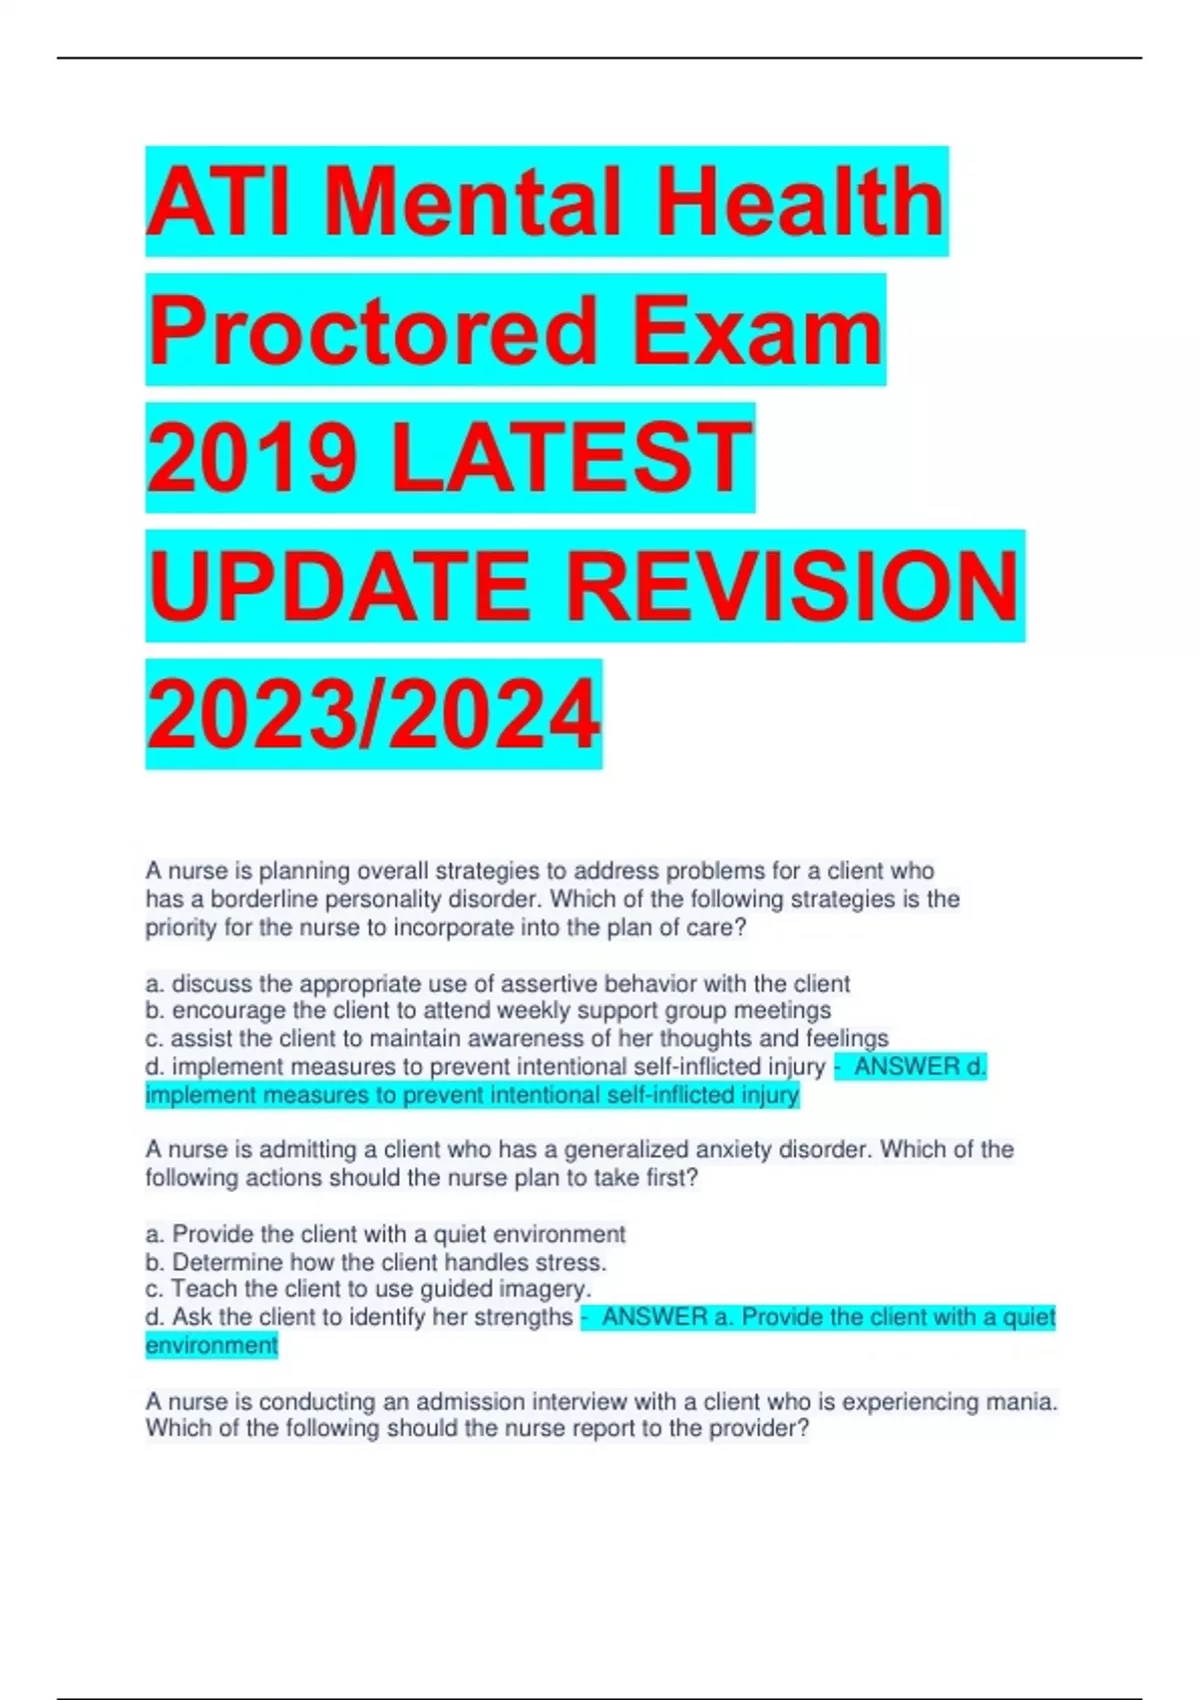 ATI Mental Health Proctored Exam 2019 LATEST UPDATE REVISION 2023/2024